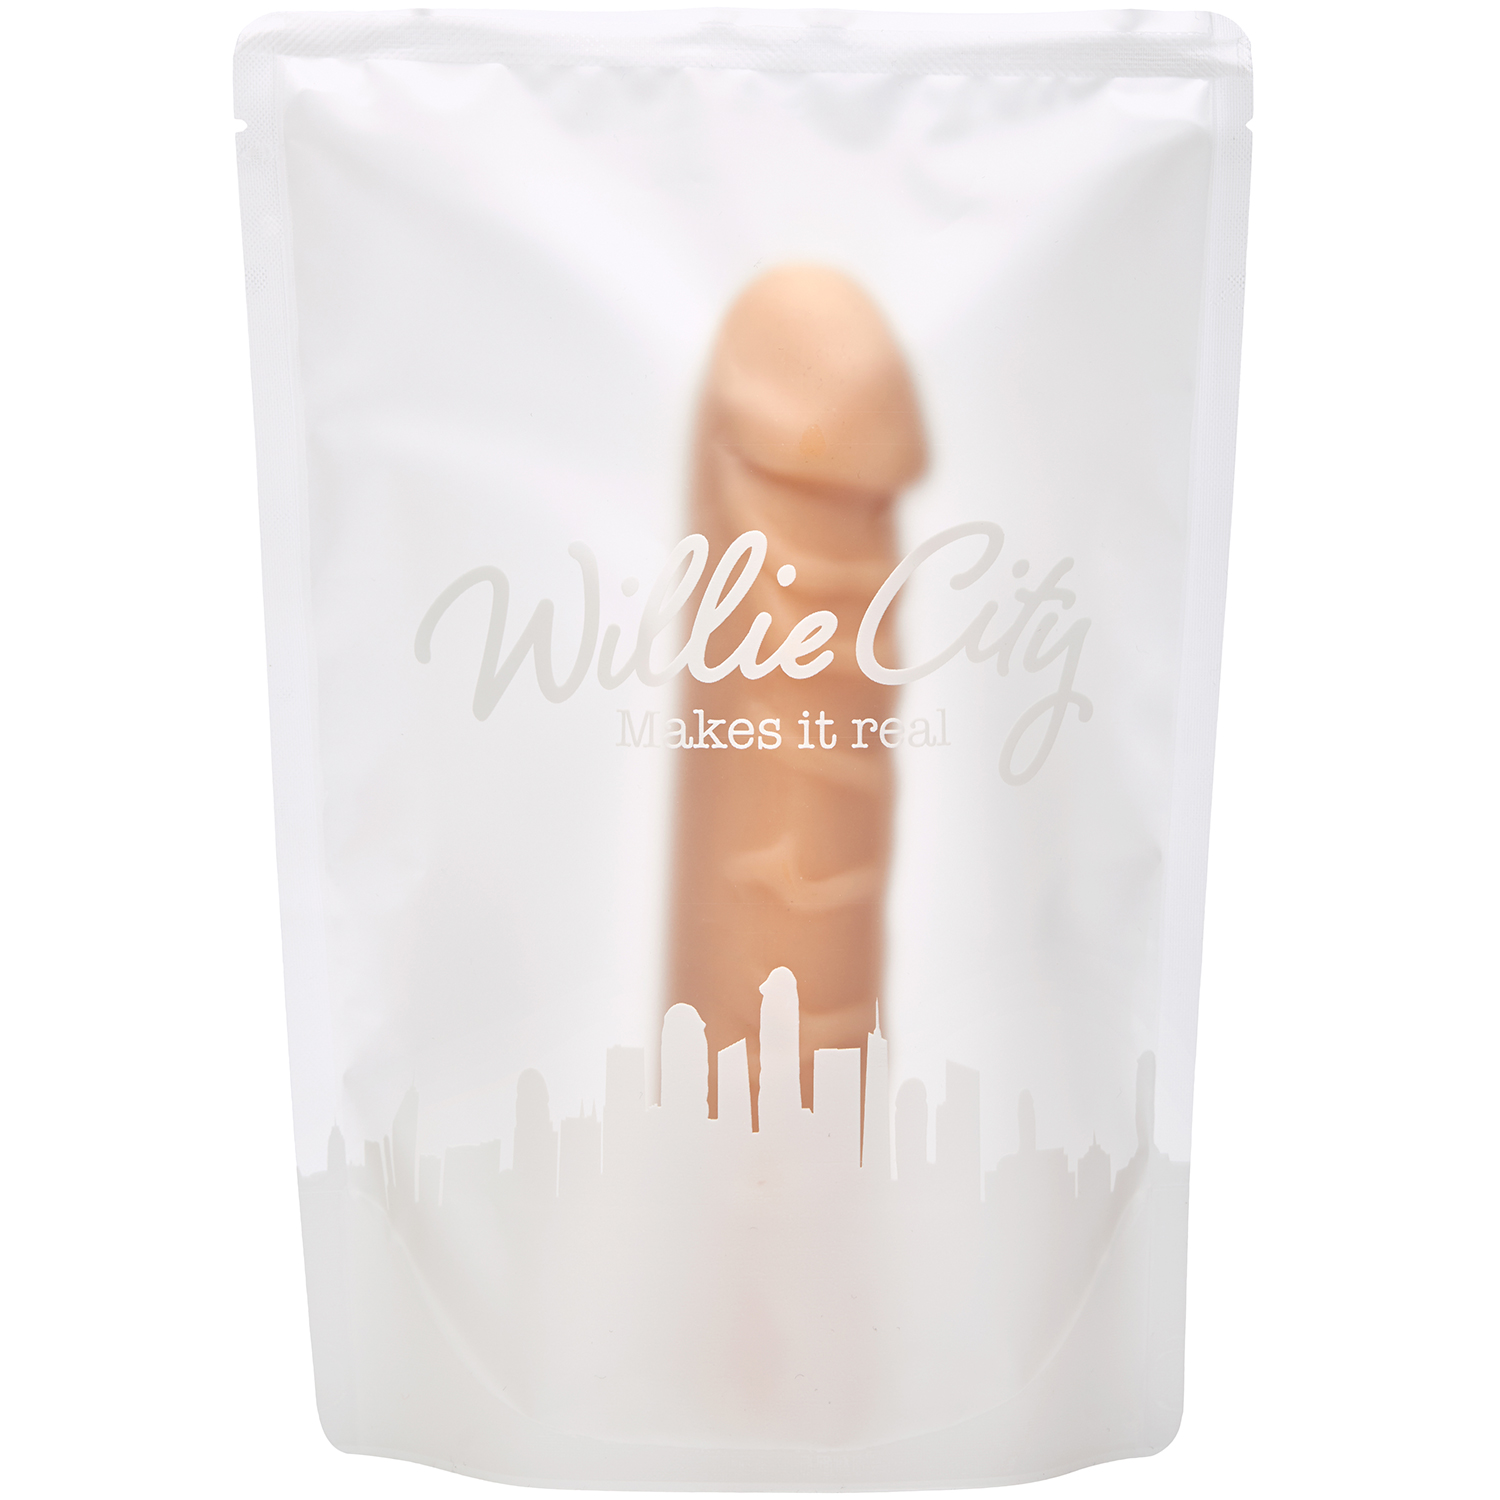 Willie City Realistisk Dildo 19 cm      - Nude